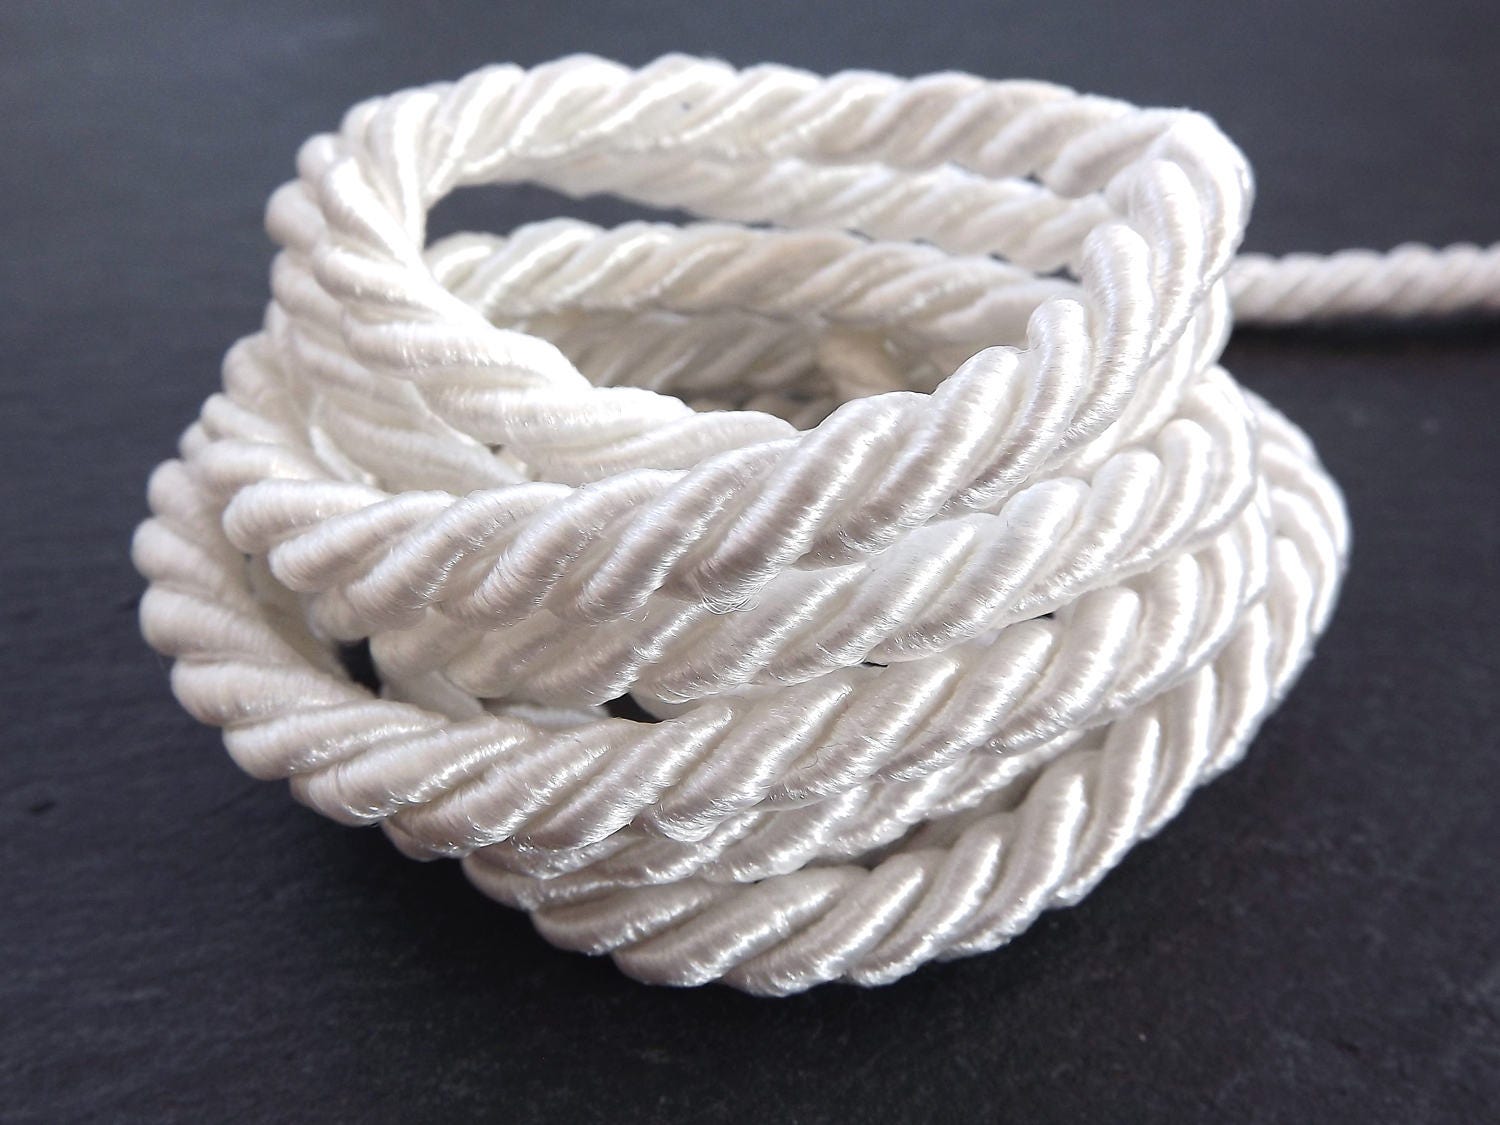 Creamy White 7mm Twisted Rayon Satin Rope Silk Braid Cord - 3 Ply Twist - 1 meters - 1.09 Yards